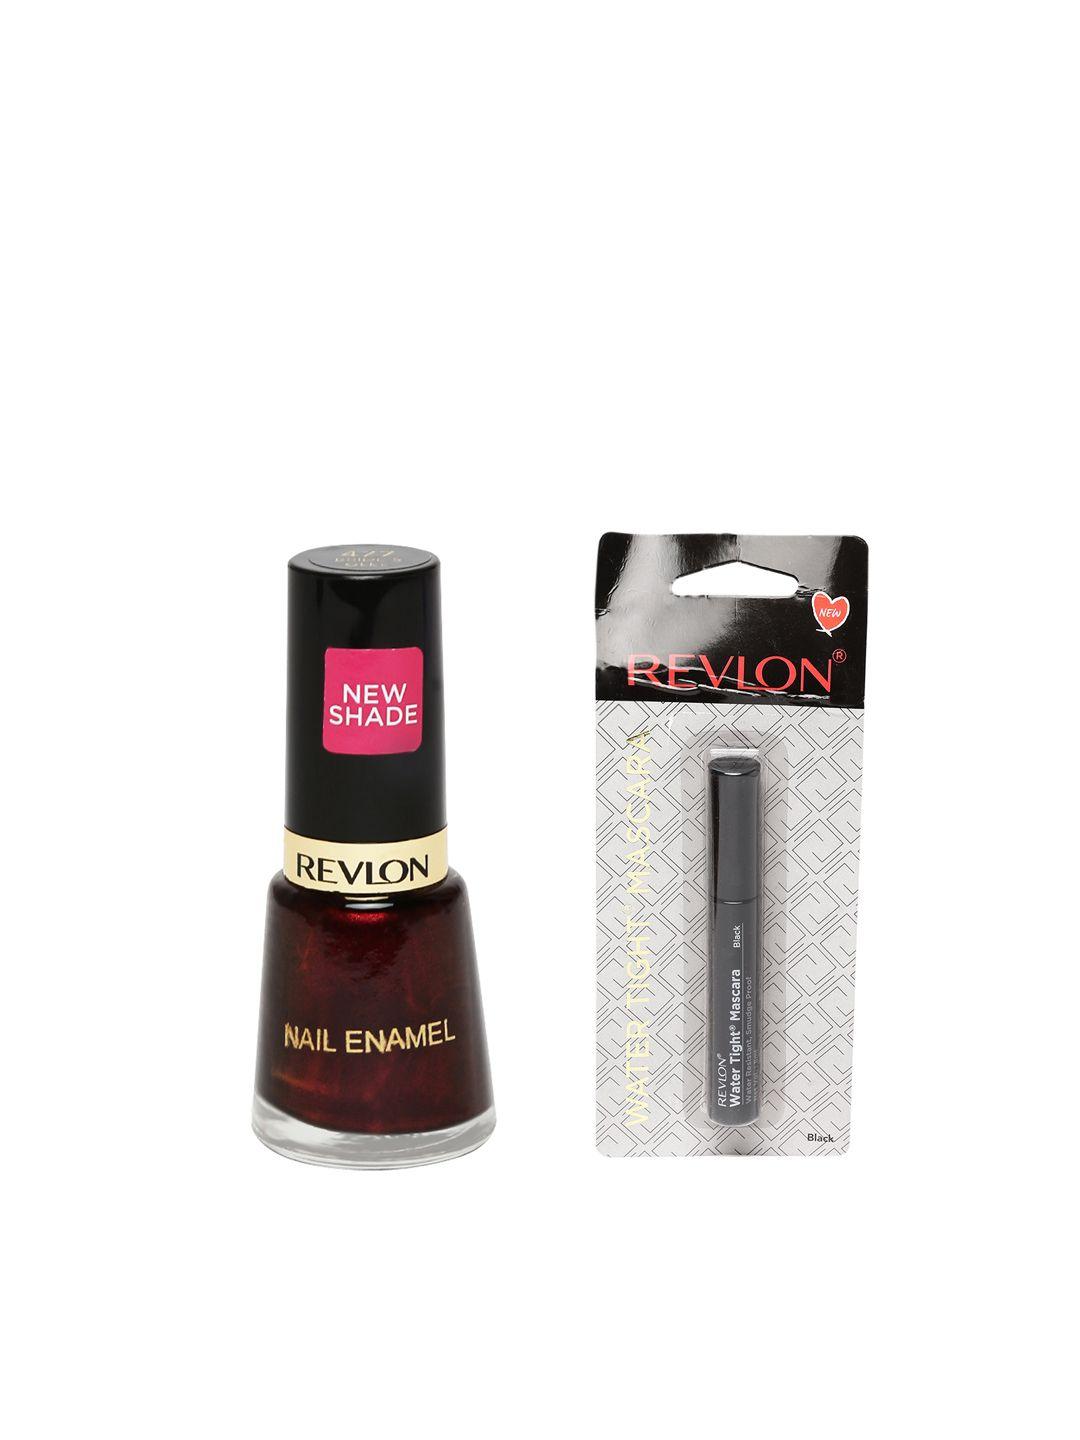 revlon set of mascara & nail polish